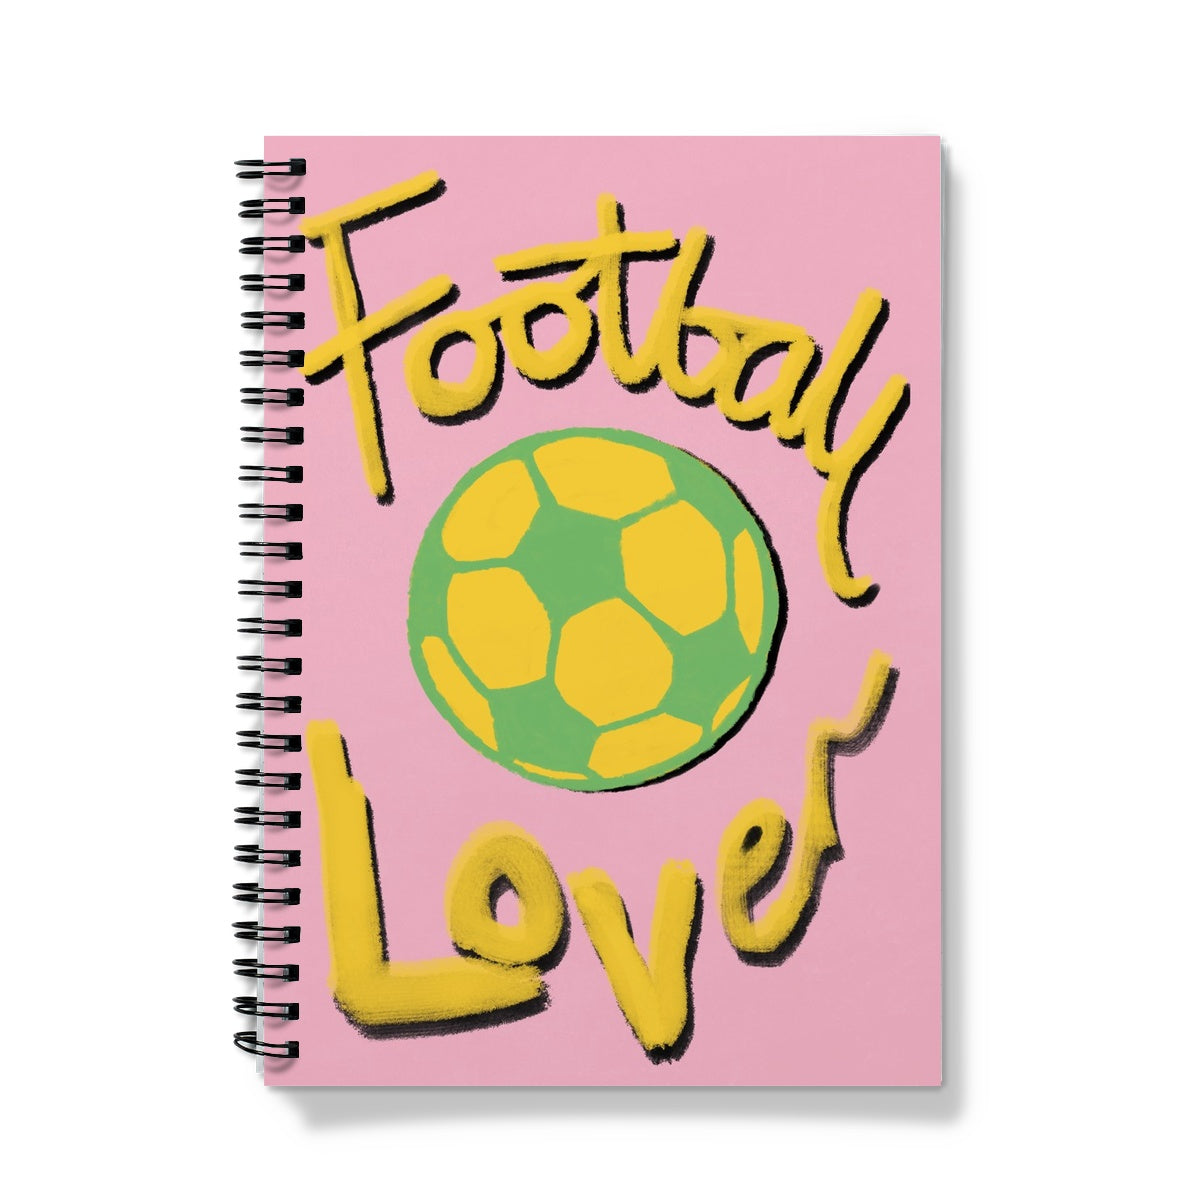 Football Lover Print - Pink, Yellow, Green Notebook